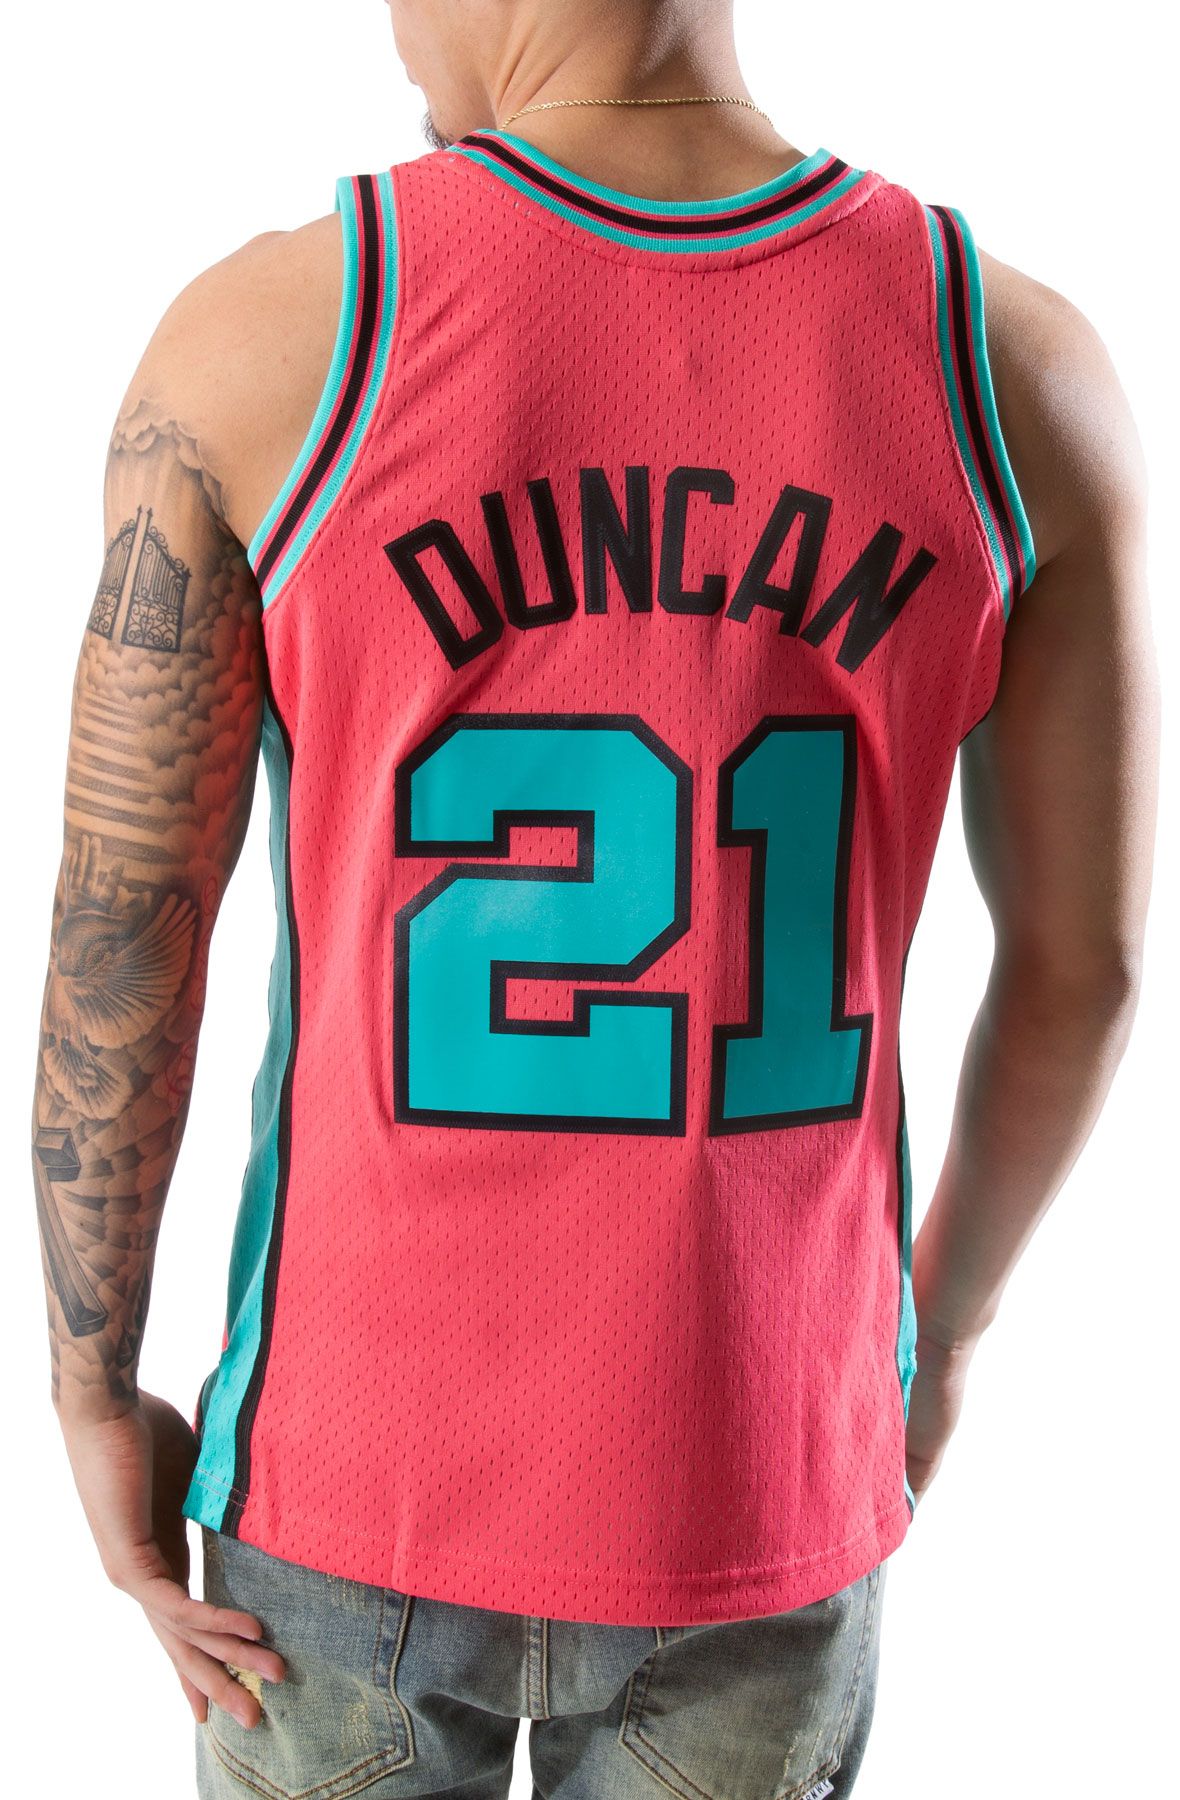 Tim Duncan San Antonio Spurs Jersey pink – Classic Authentics